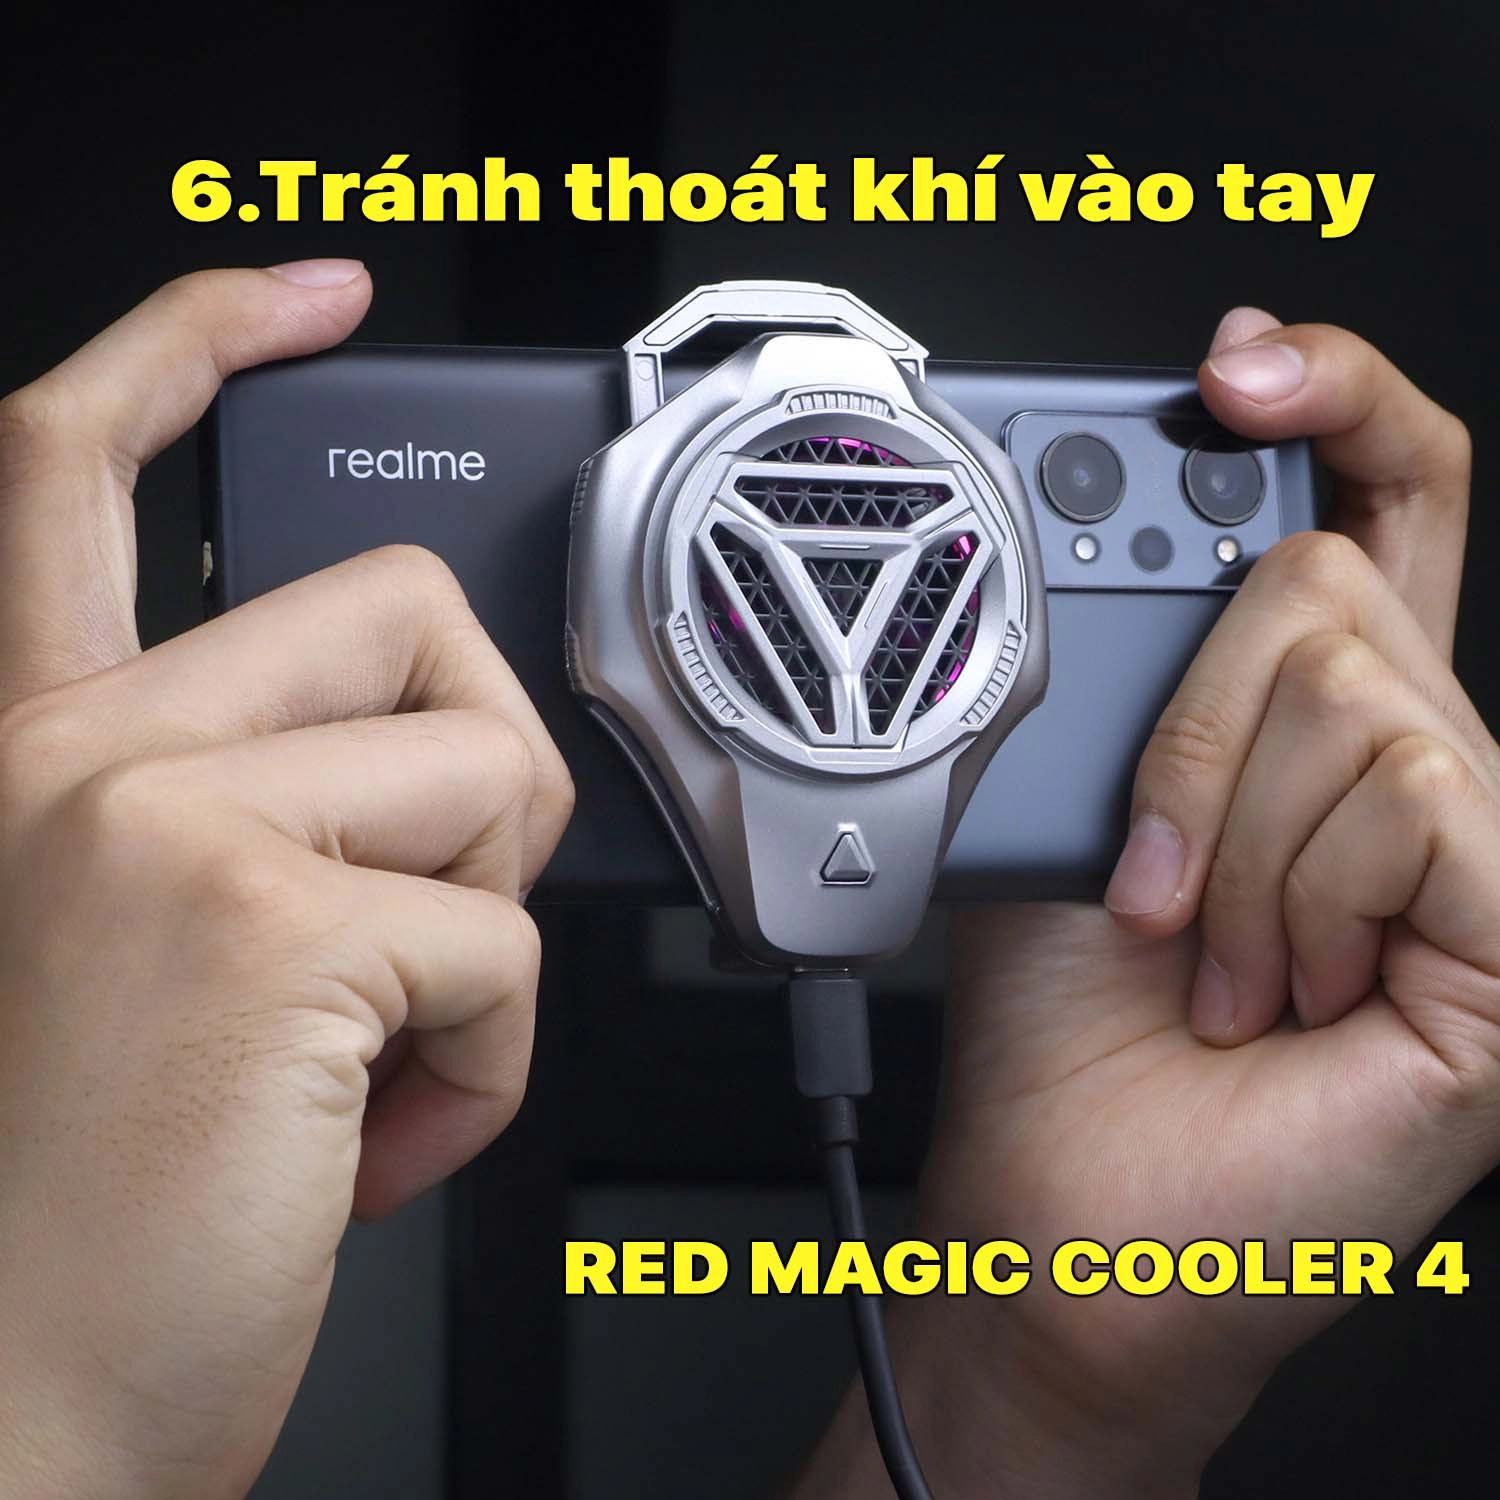 quat-tan-nhiet-dien-thoai-red-magic-cooler-4-6